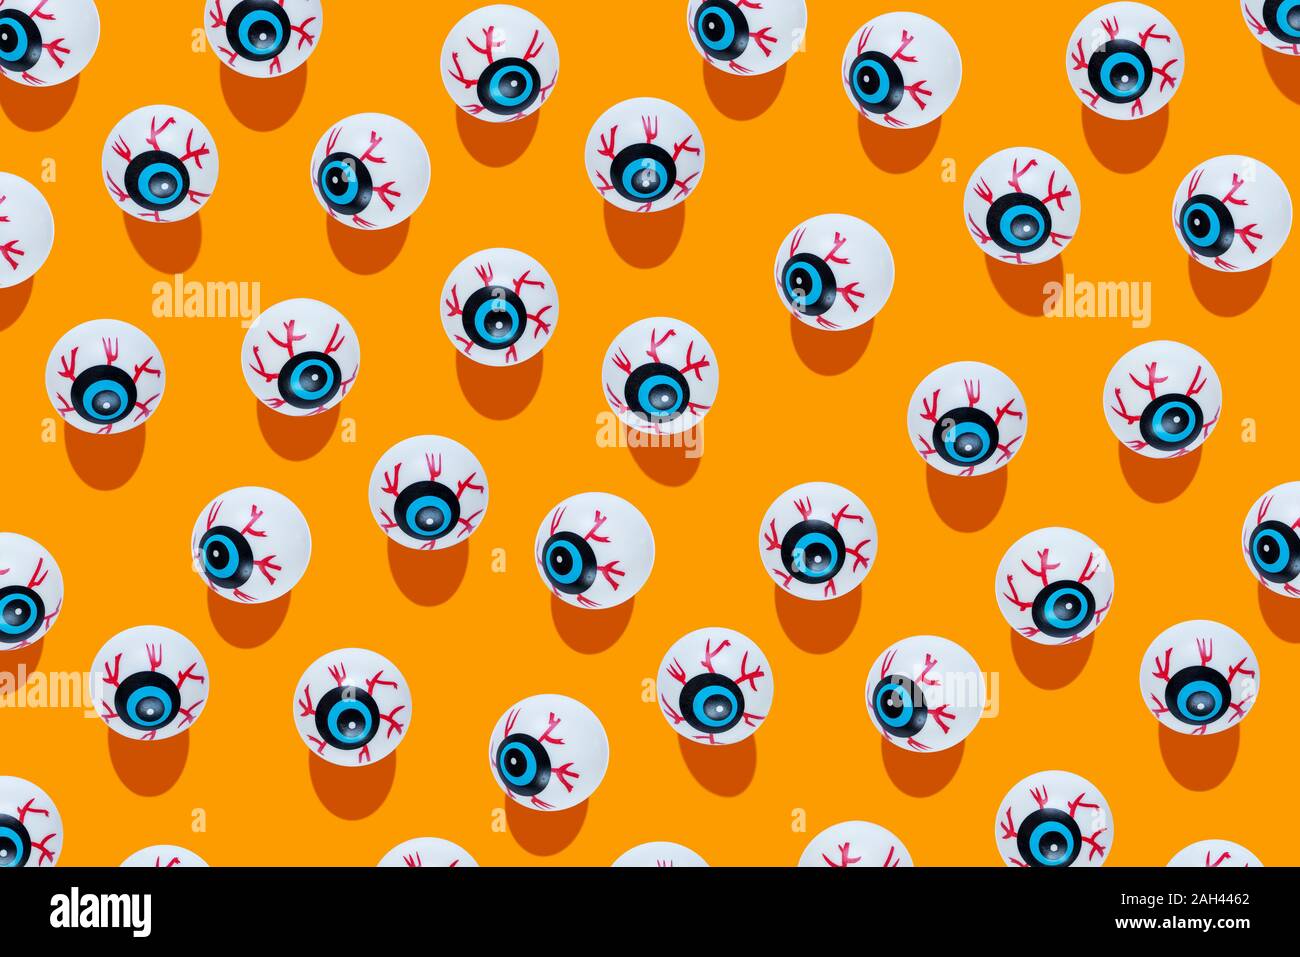 Fake scary eyeballs for halloween on orange background Stock Photo